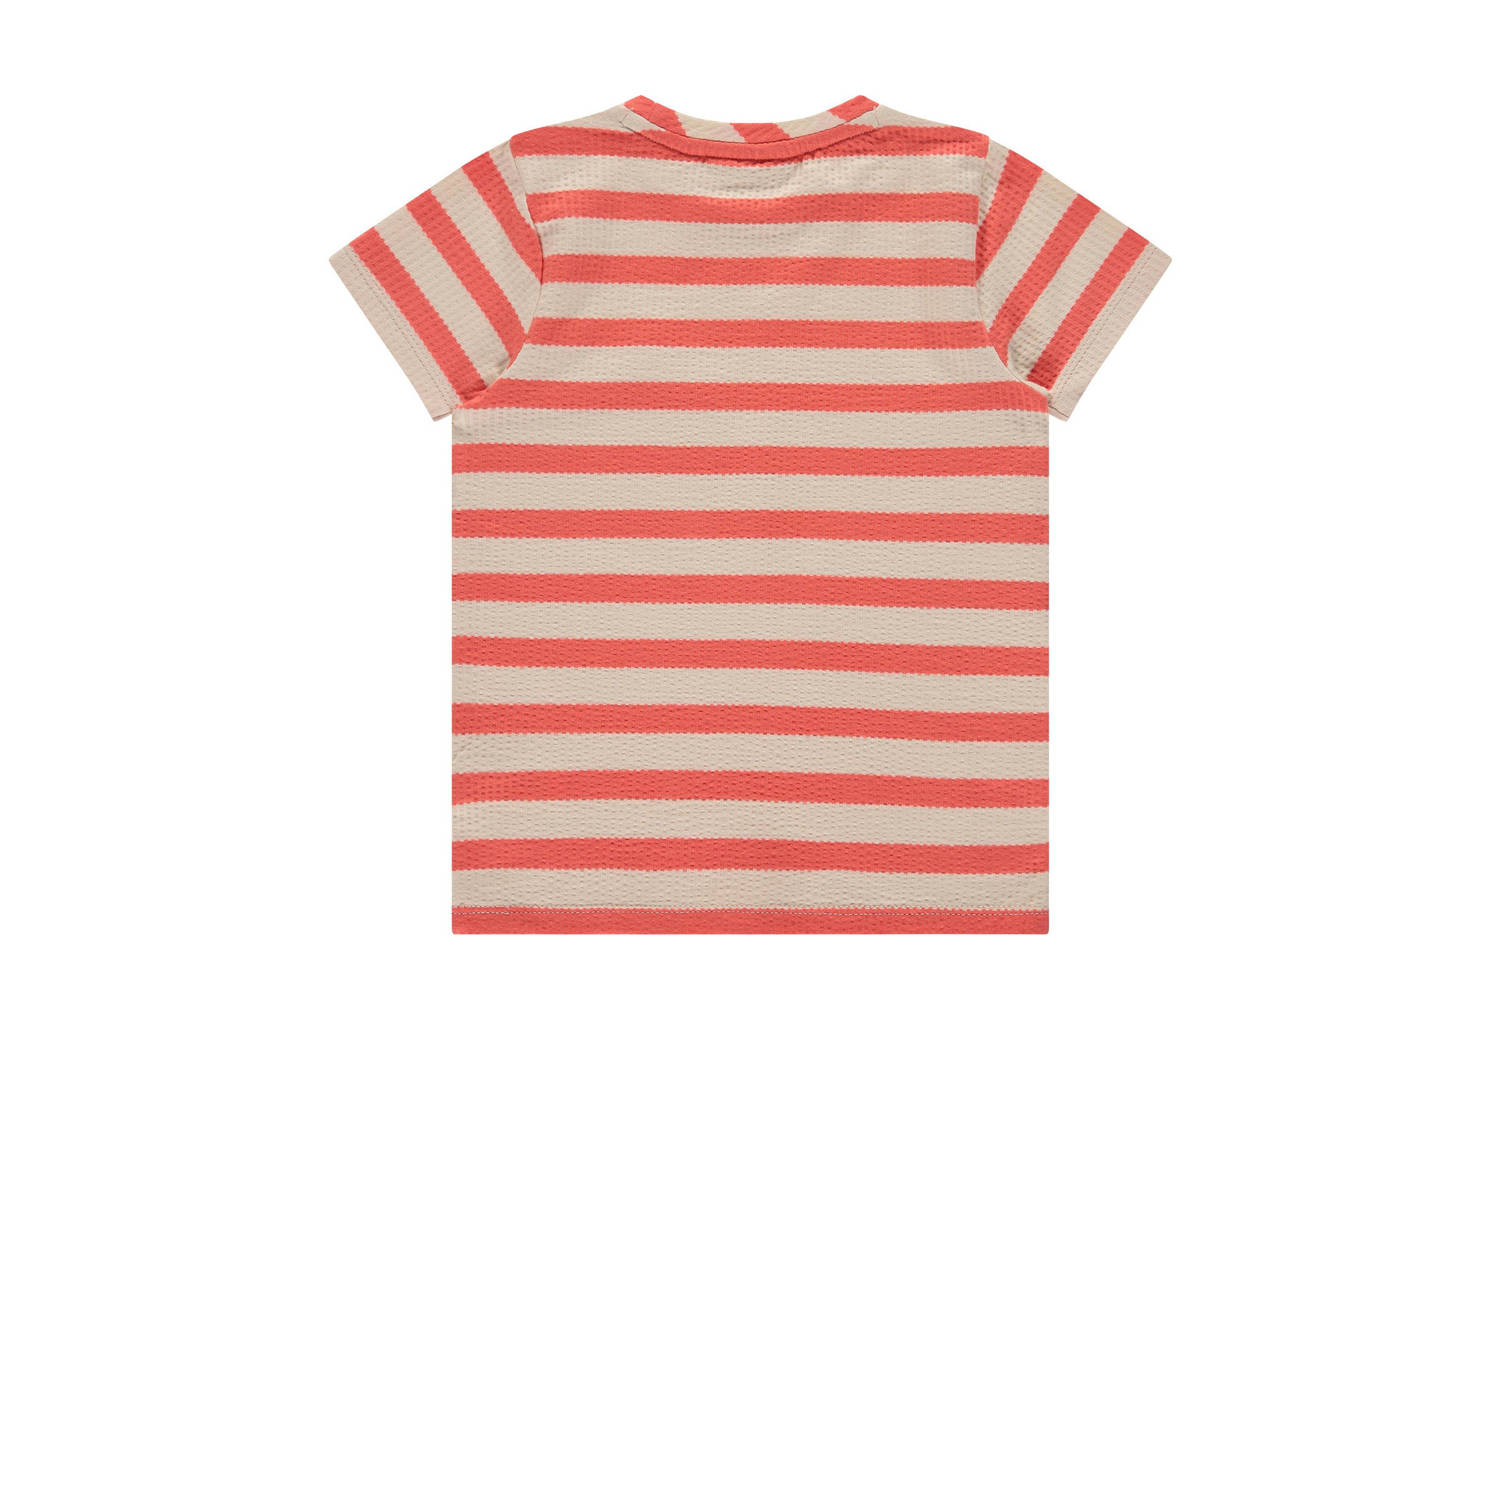 Stains&Stories gestreept T-shirt oranje grijs